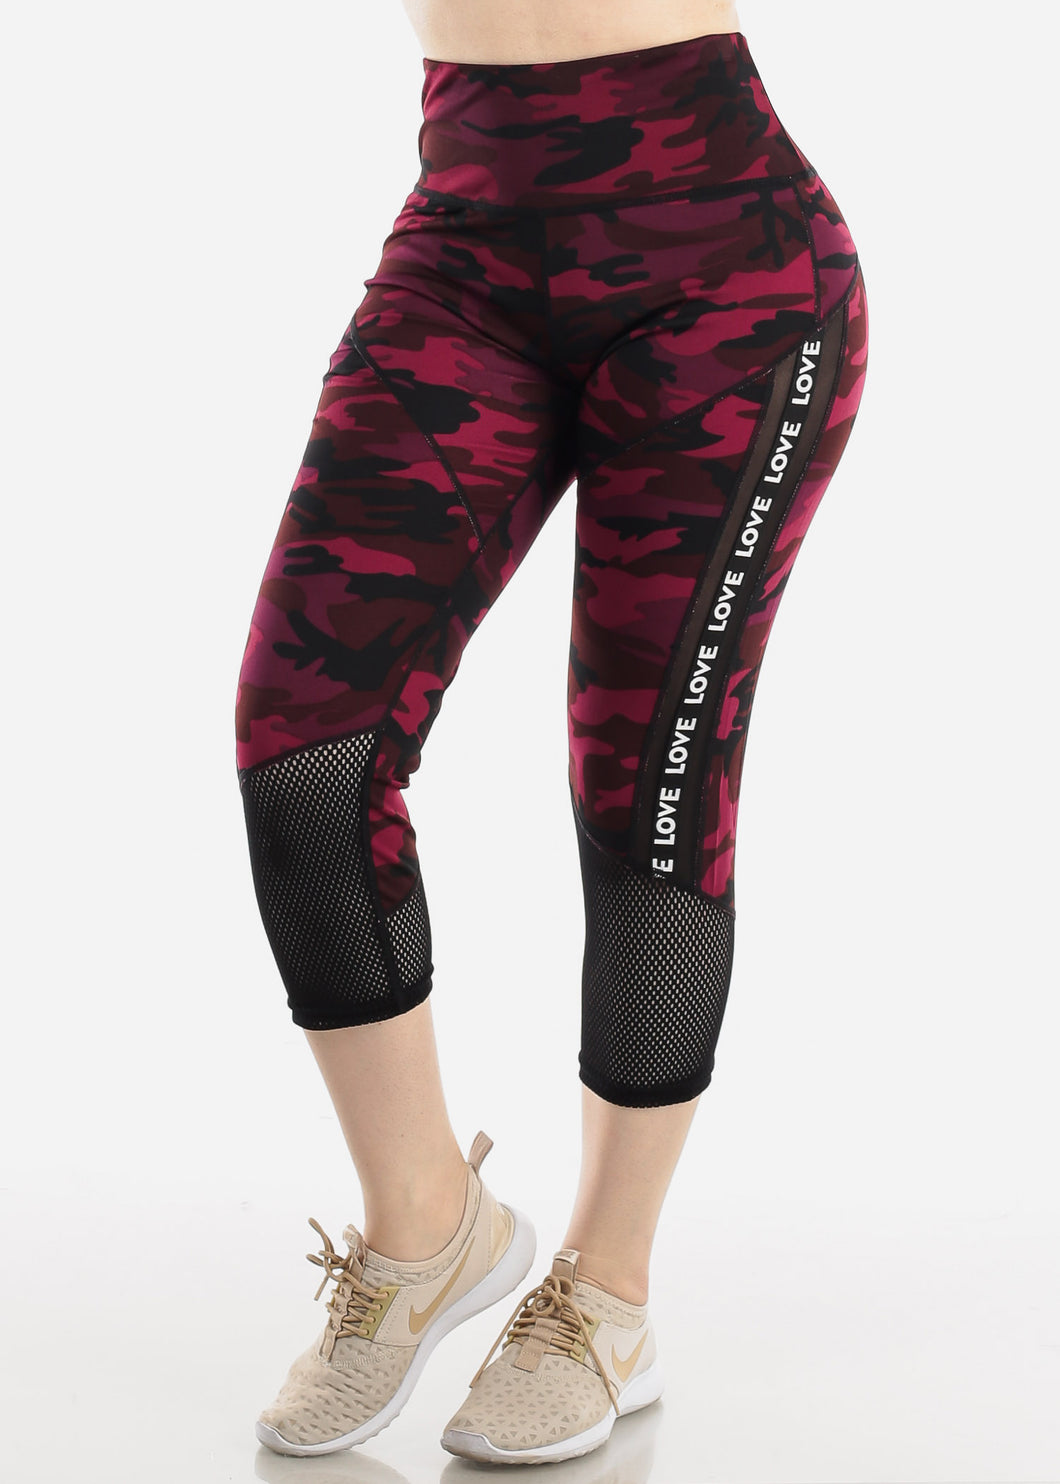 Women's Camouflage Print Red and Black Capri Leggings Y6677 – One